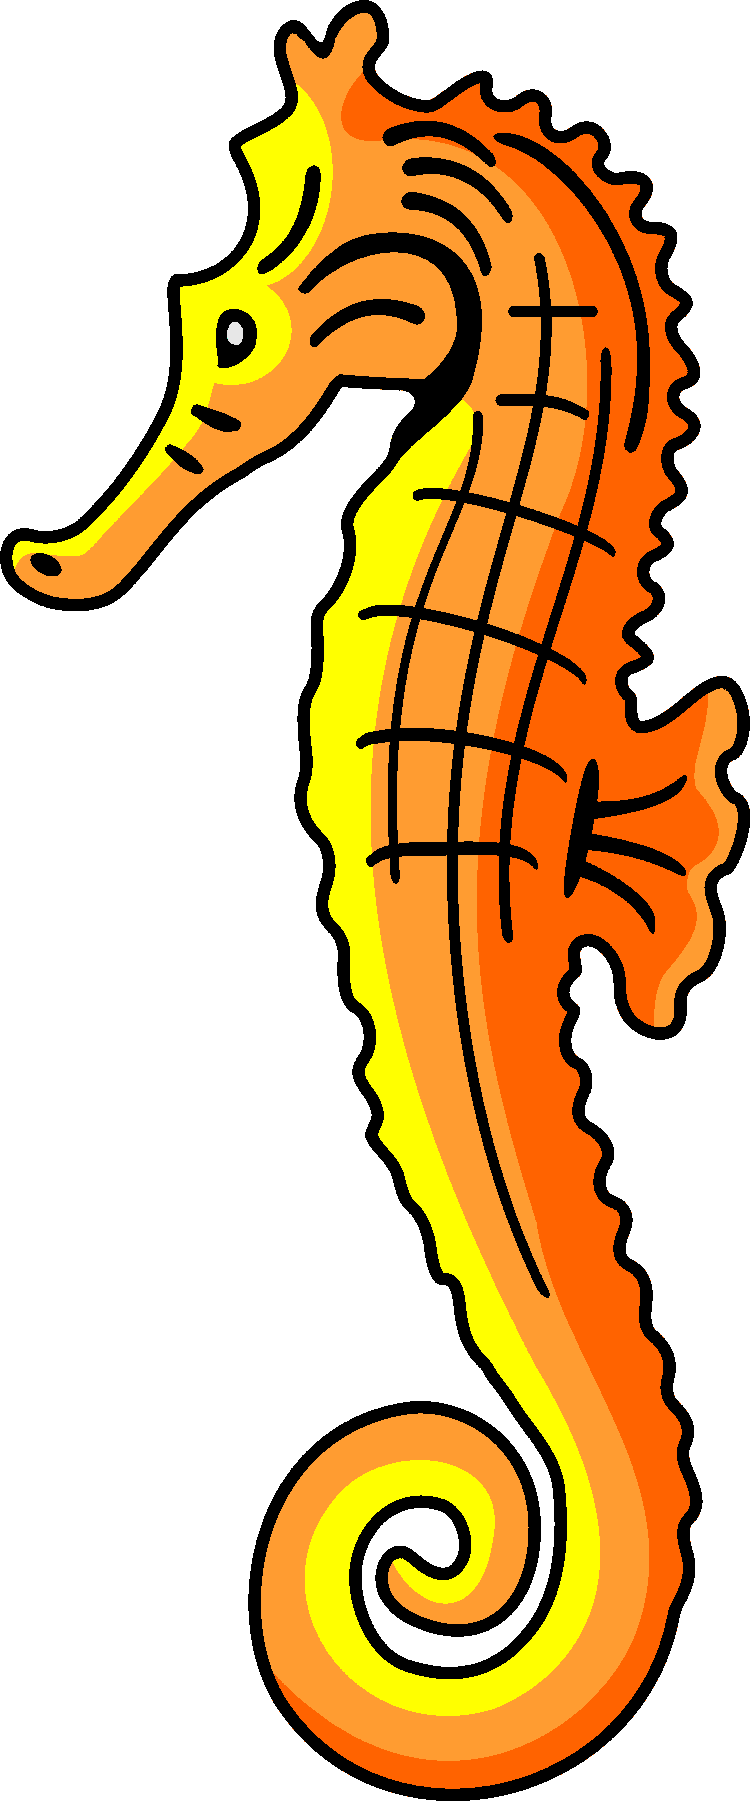 Seahorse clipart 1